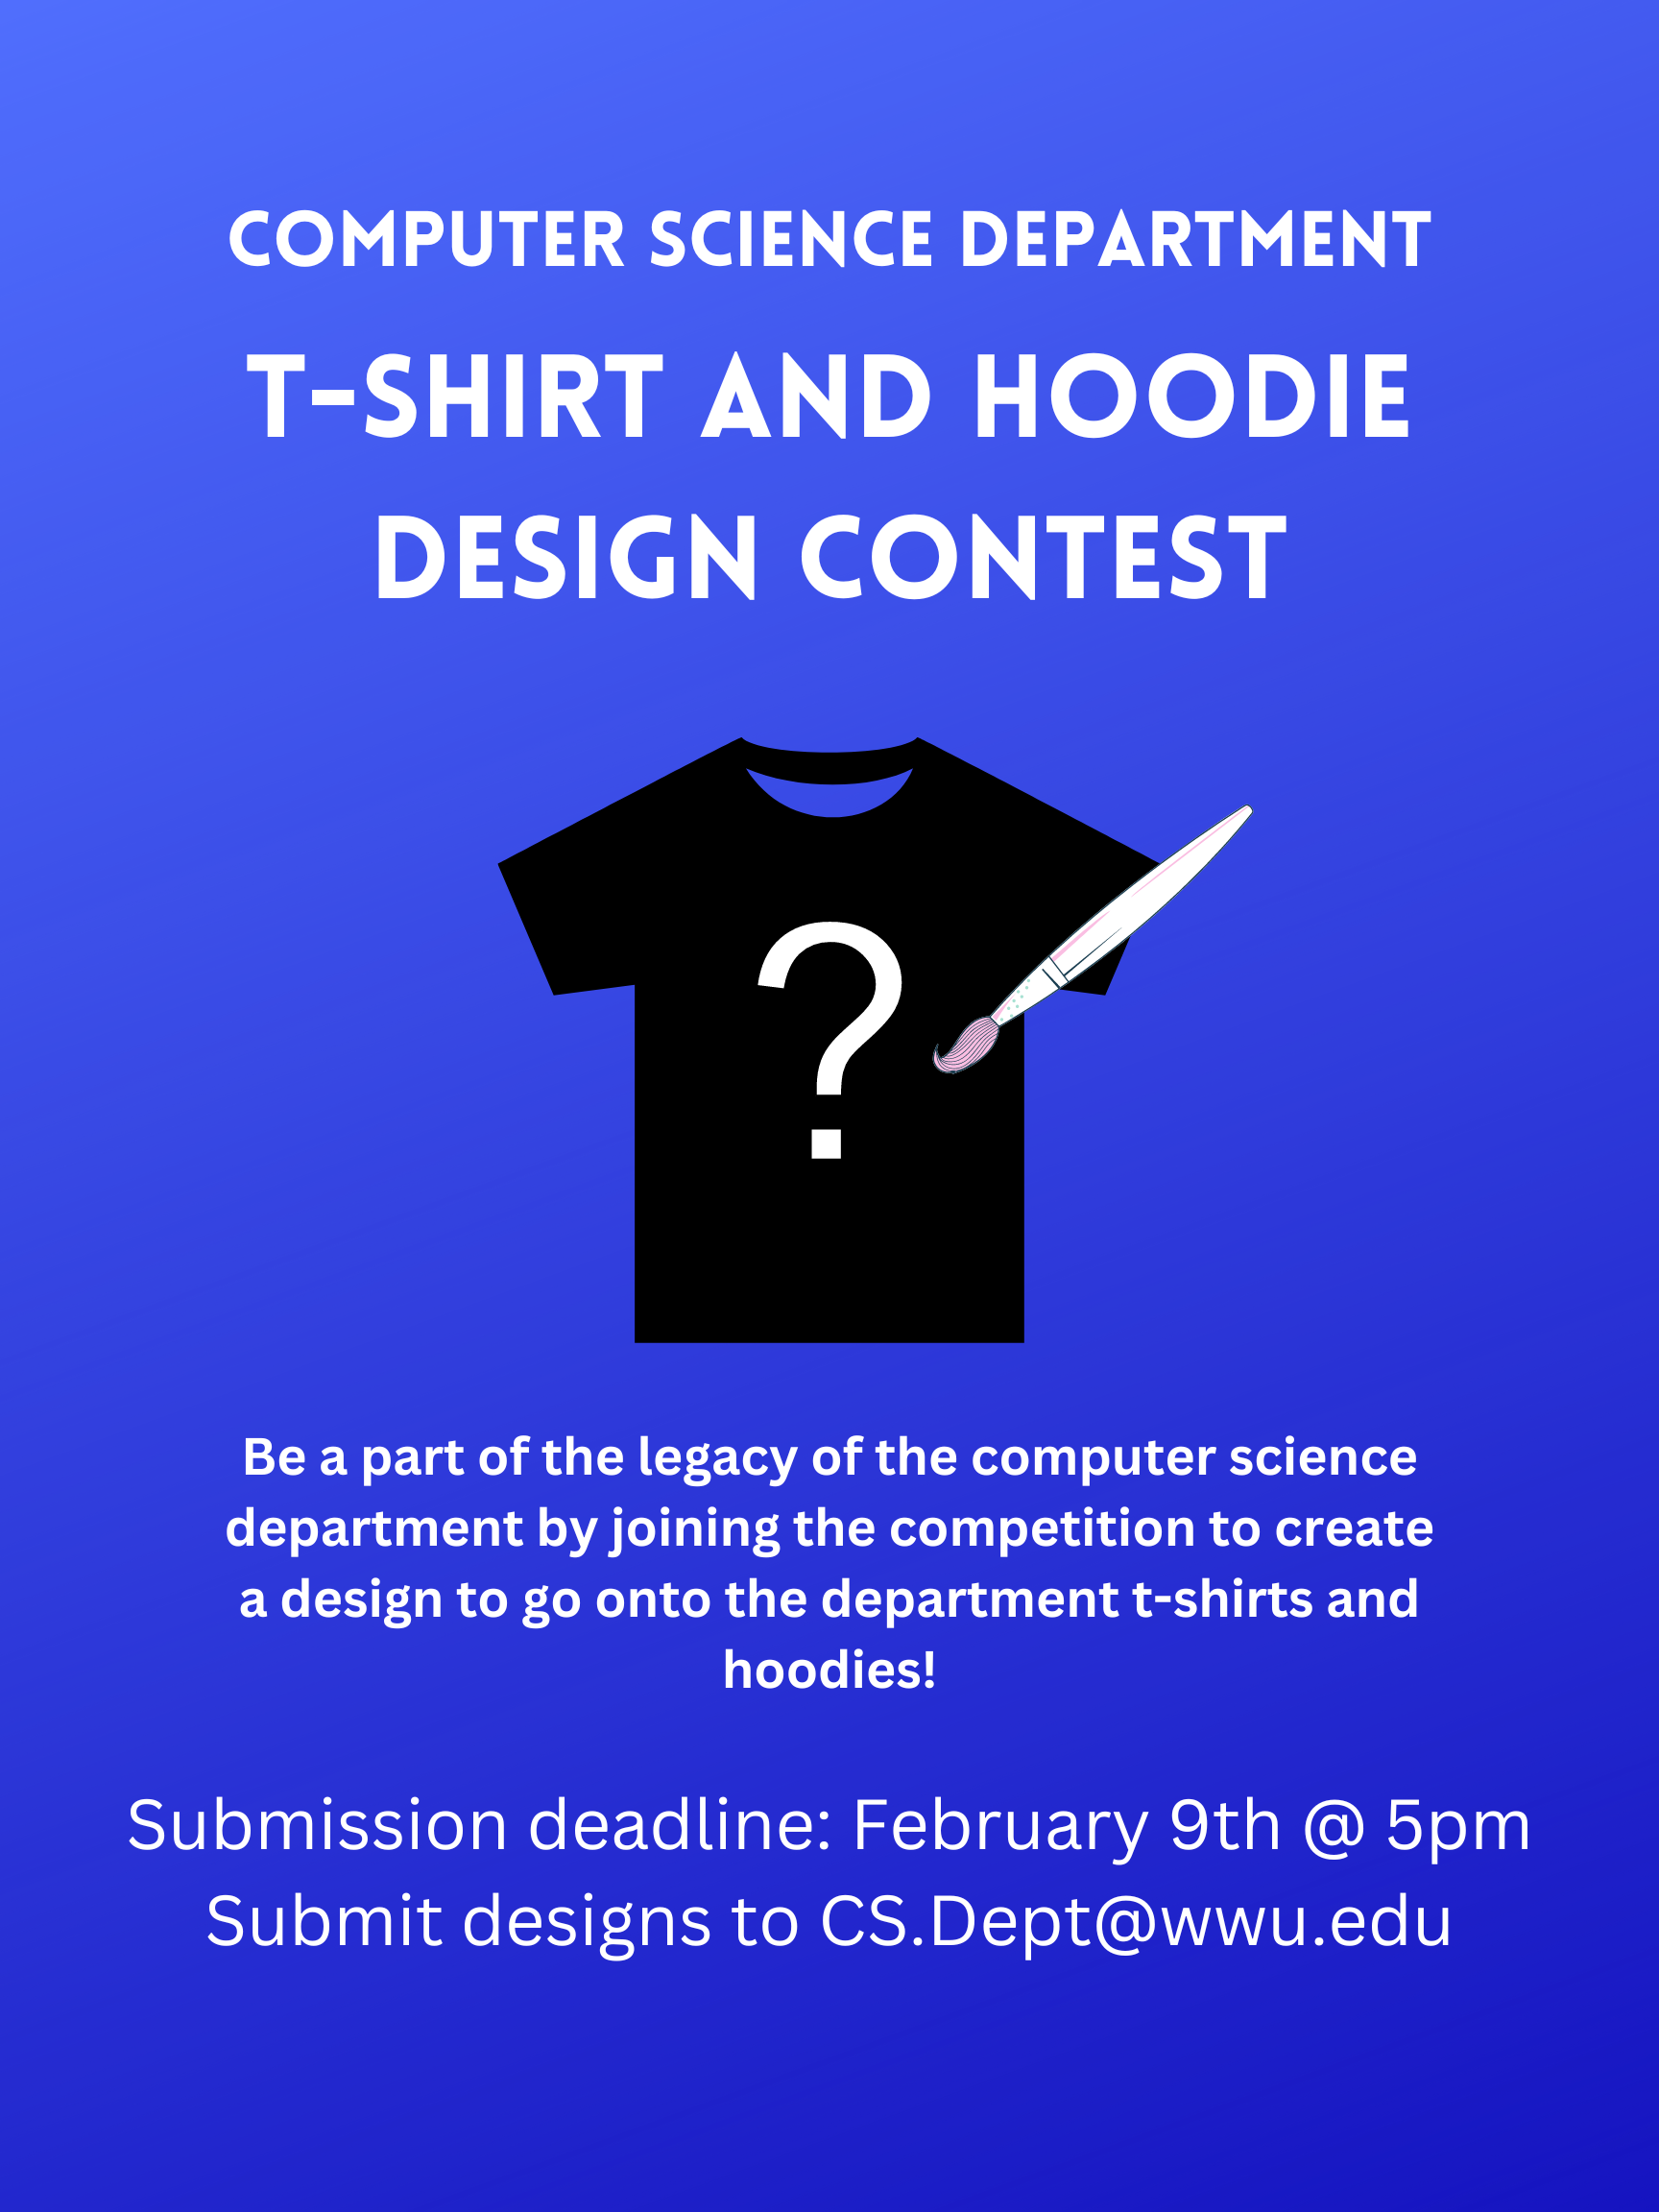 T-shirt design contest.  Submit to cs.dept@wwu.edu Deadline February 9th 5:00pm